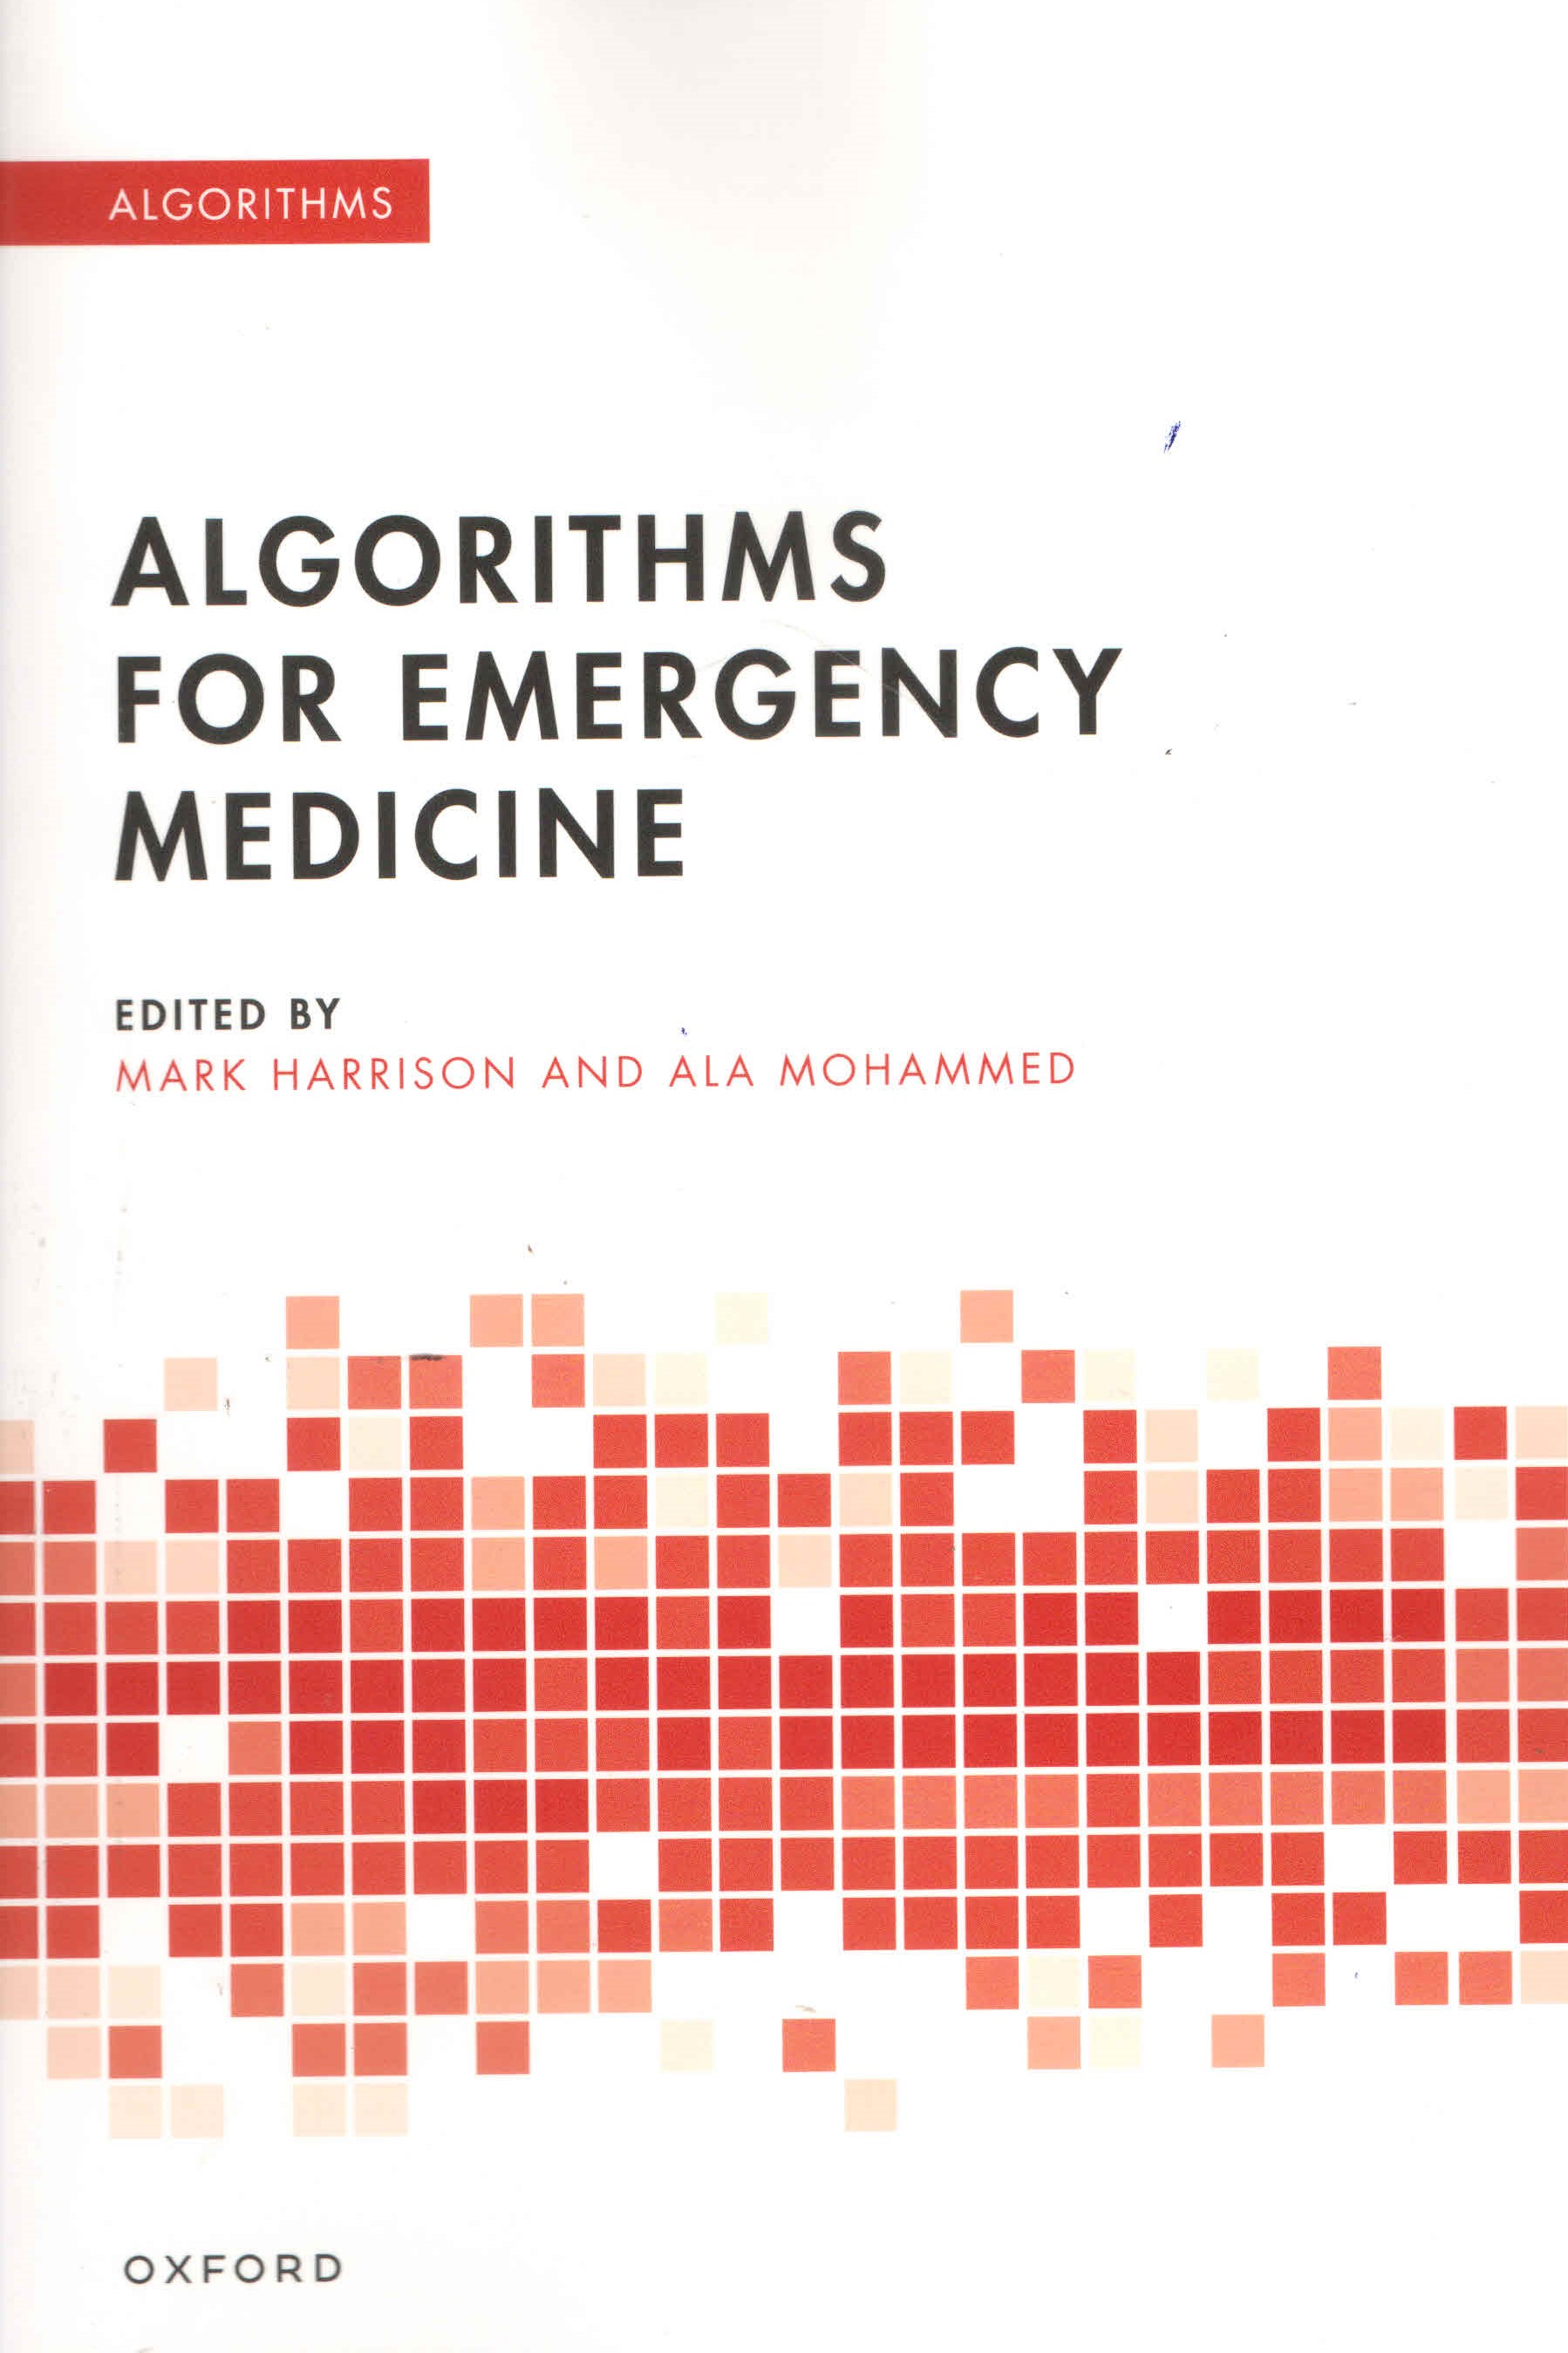 

exclusive-publishers/oxford-university-press/algorithms-for-emergency-medicine-9780198829133